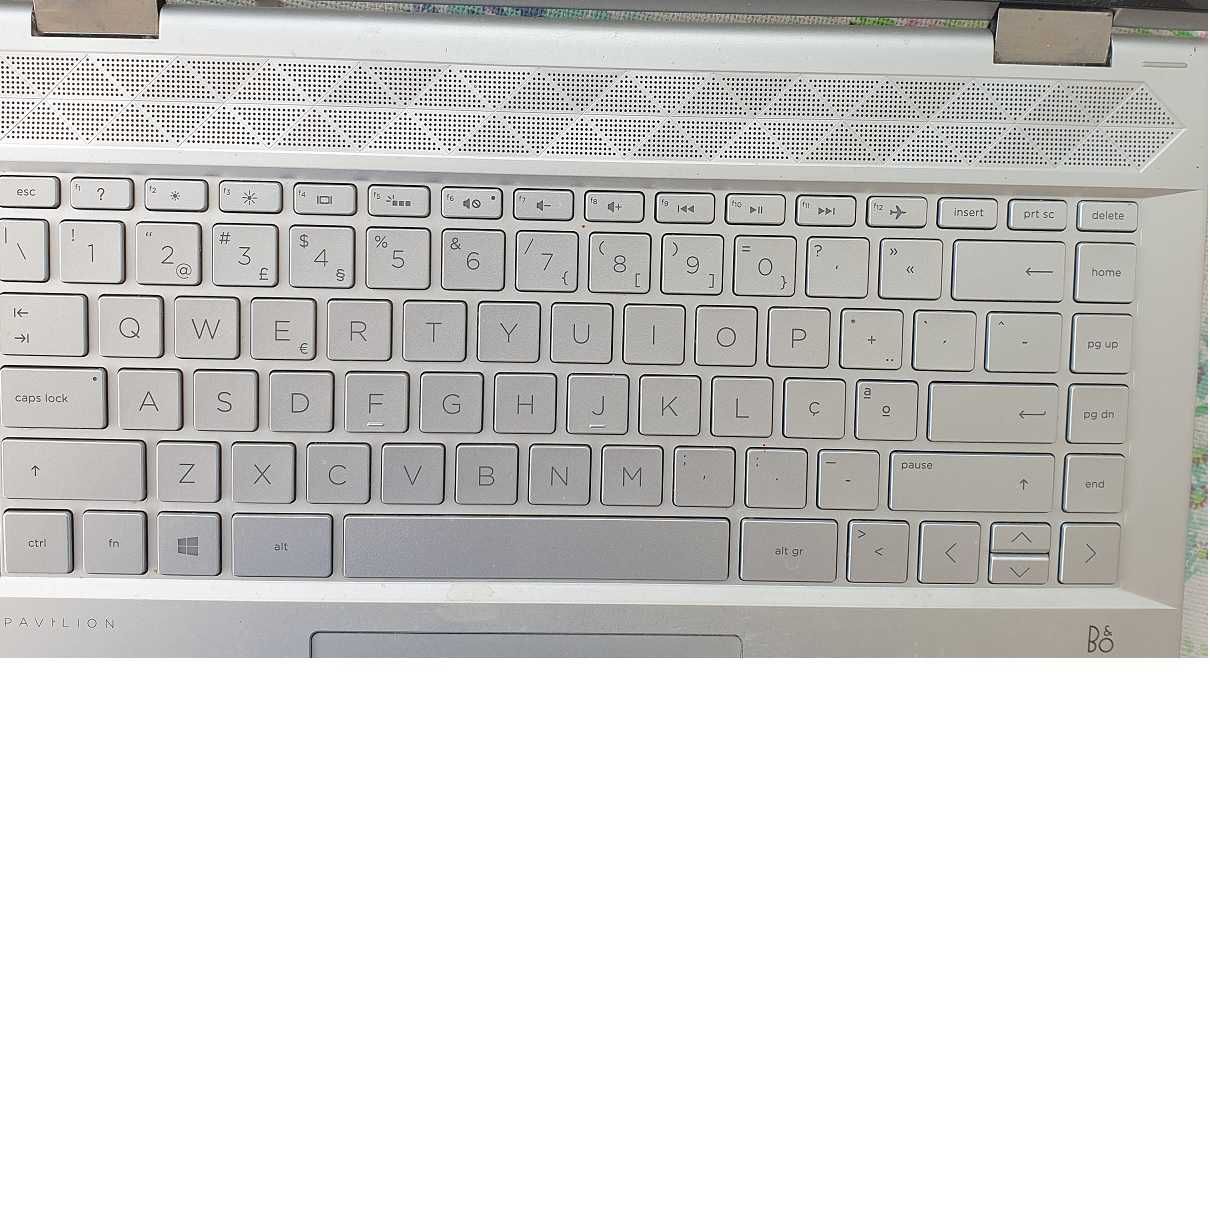 teclado HP Pavilion x360 - 14m, restantes peças sob consulta